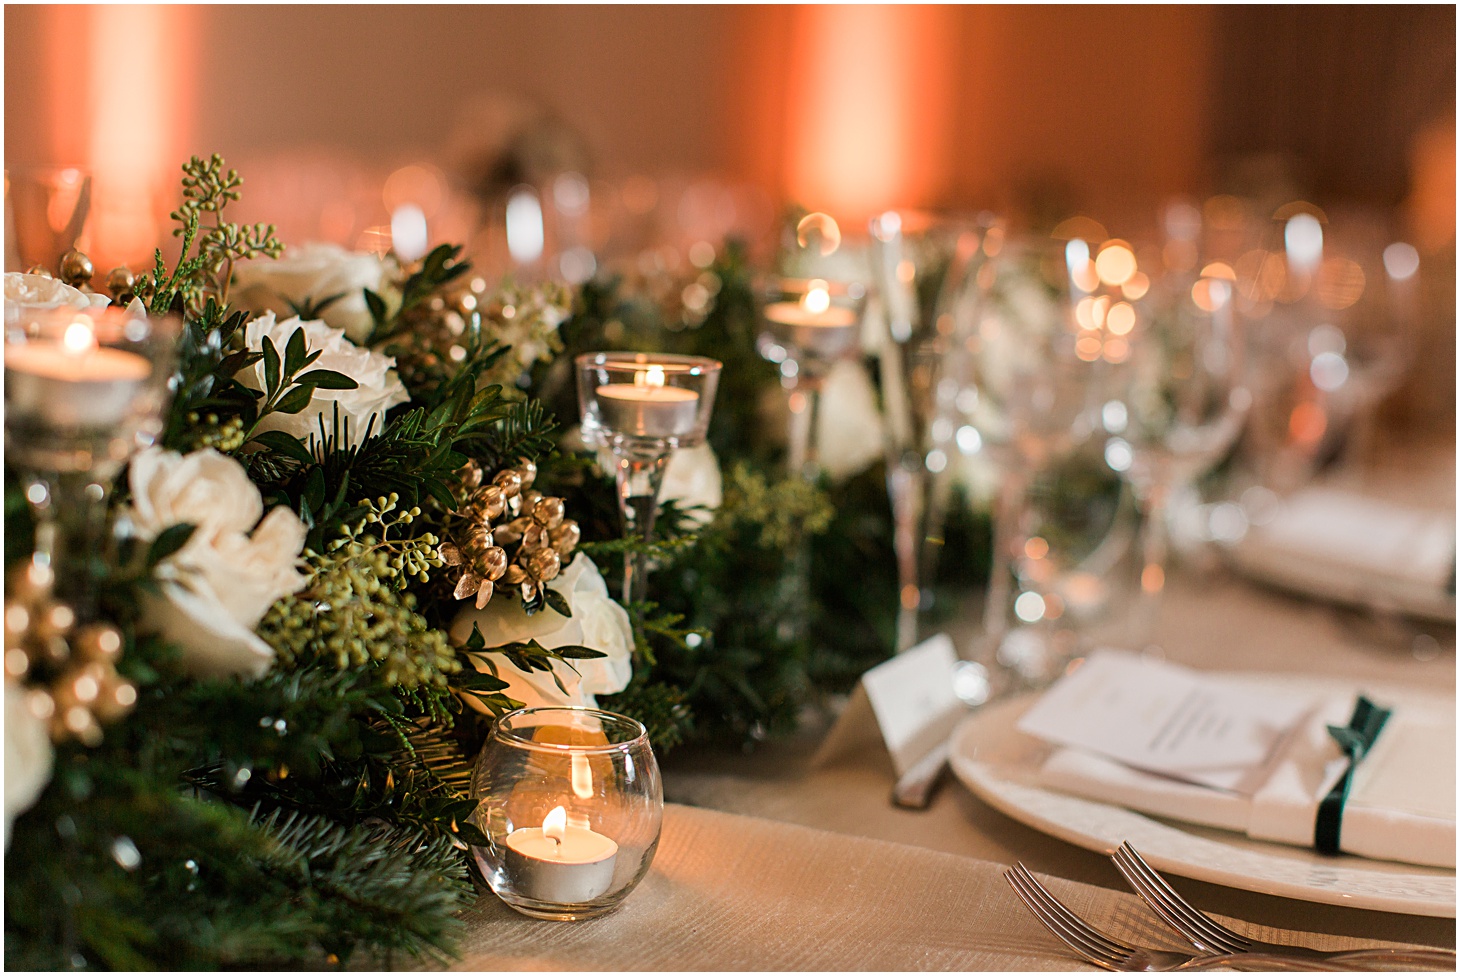 Festive Winter Wedding with greenery and gold at Four Seasons Hotel Washington | Sarah Bradshaw Photography